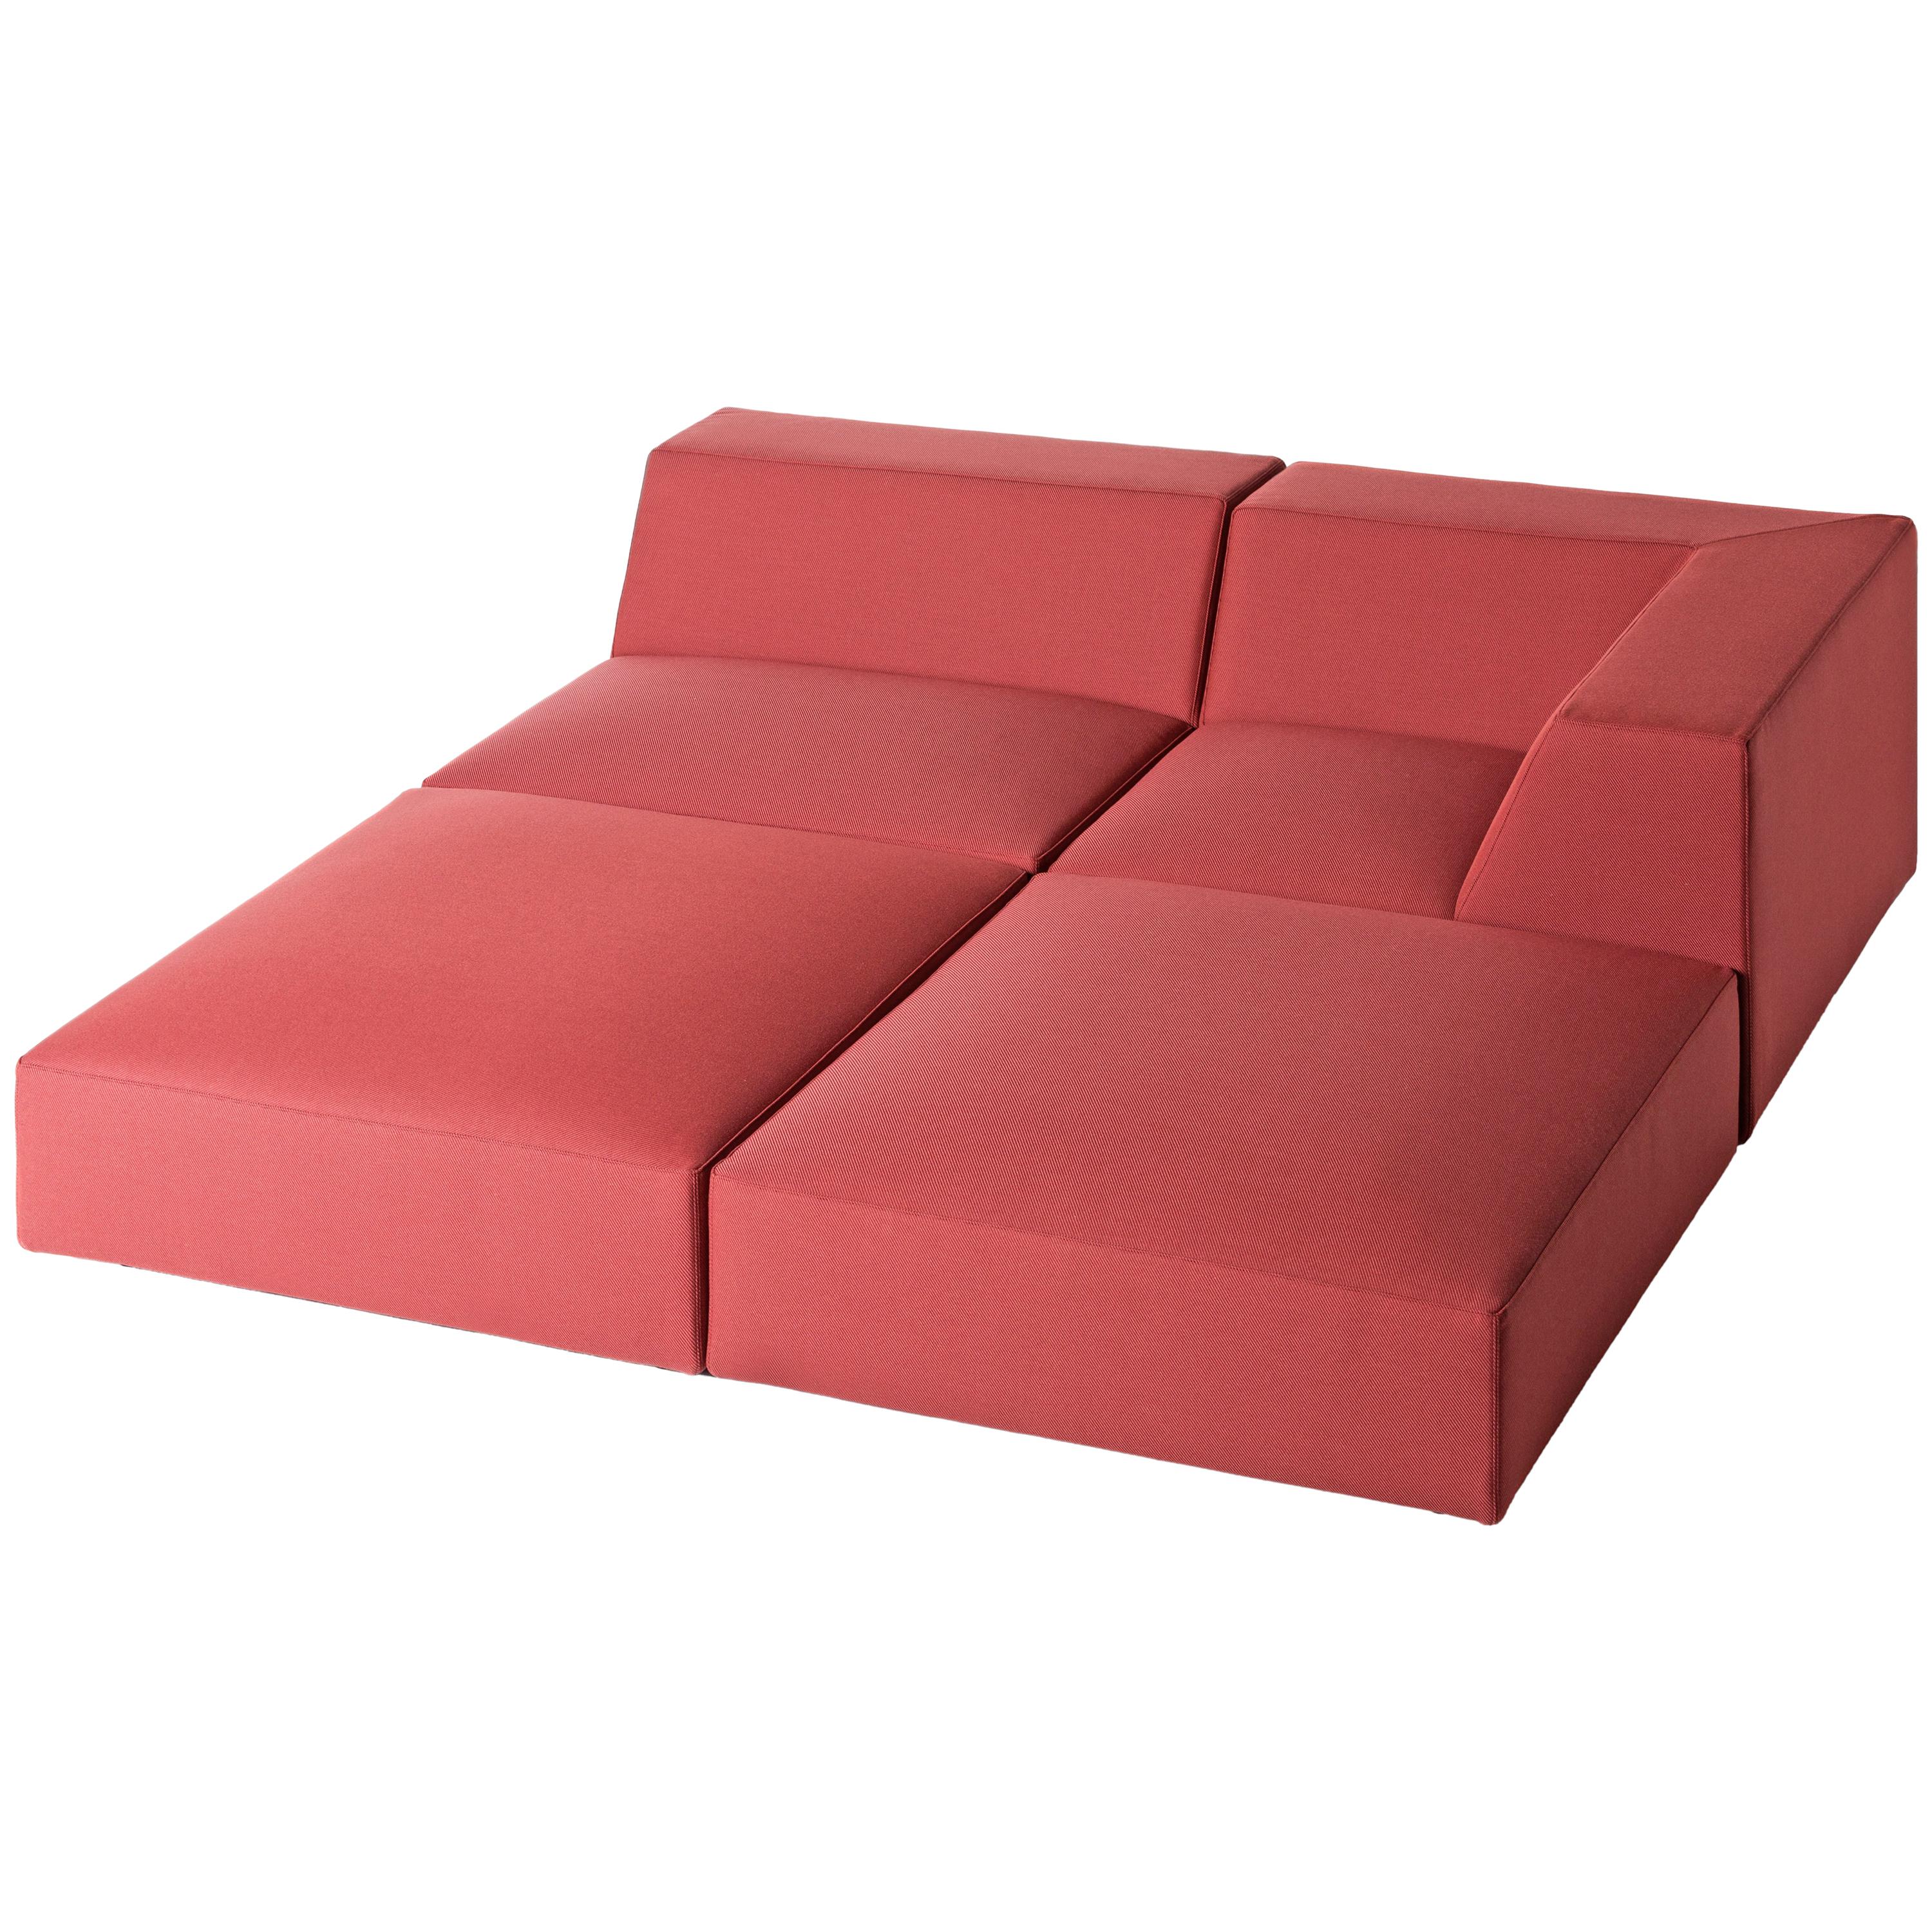 Baleri Italia Mismatch Modular Sofa in Red Fabric by Claesson Koivisto Rune